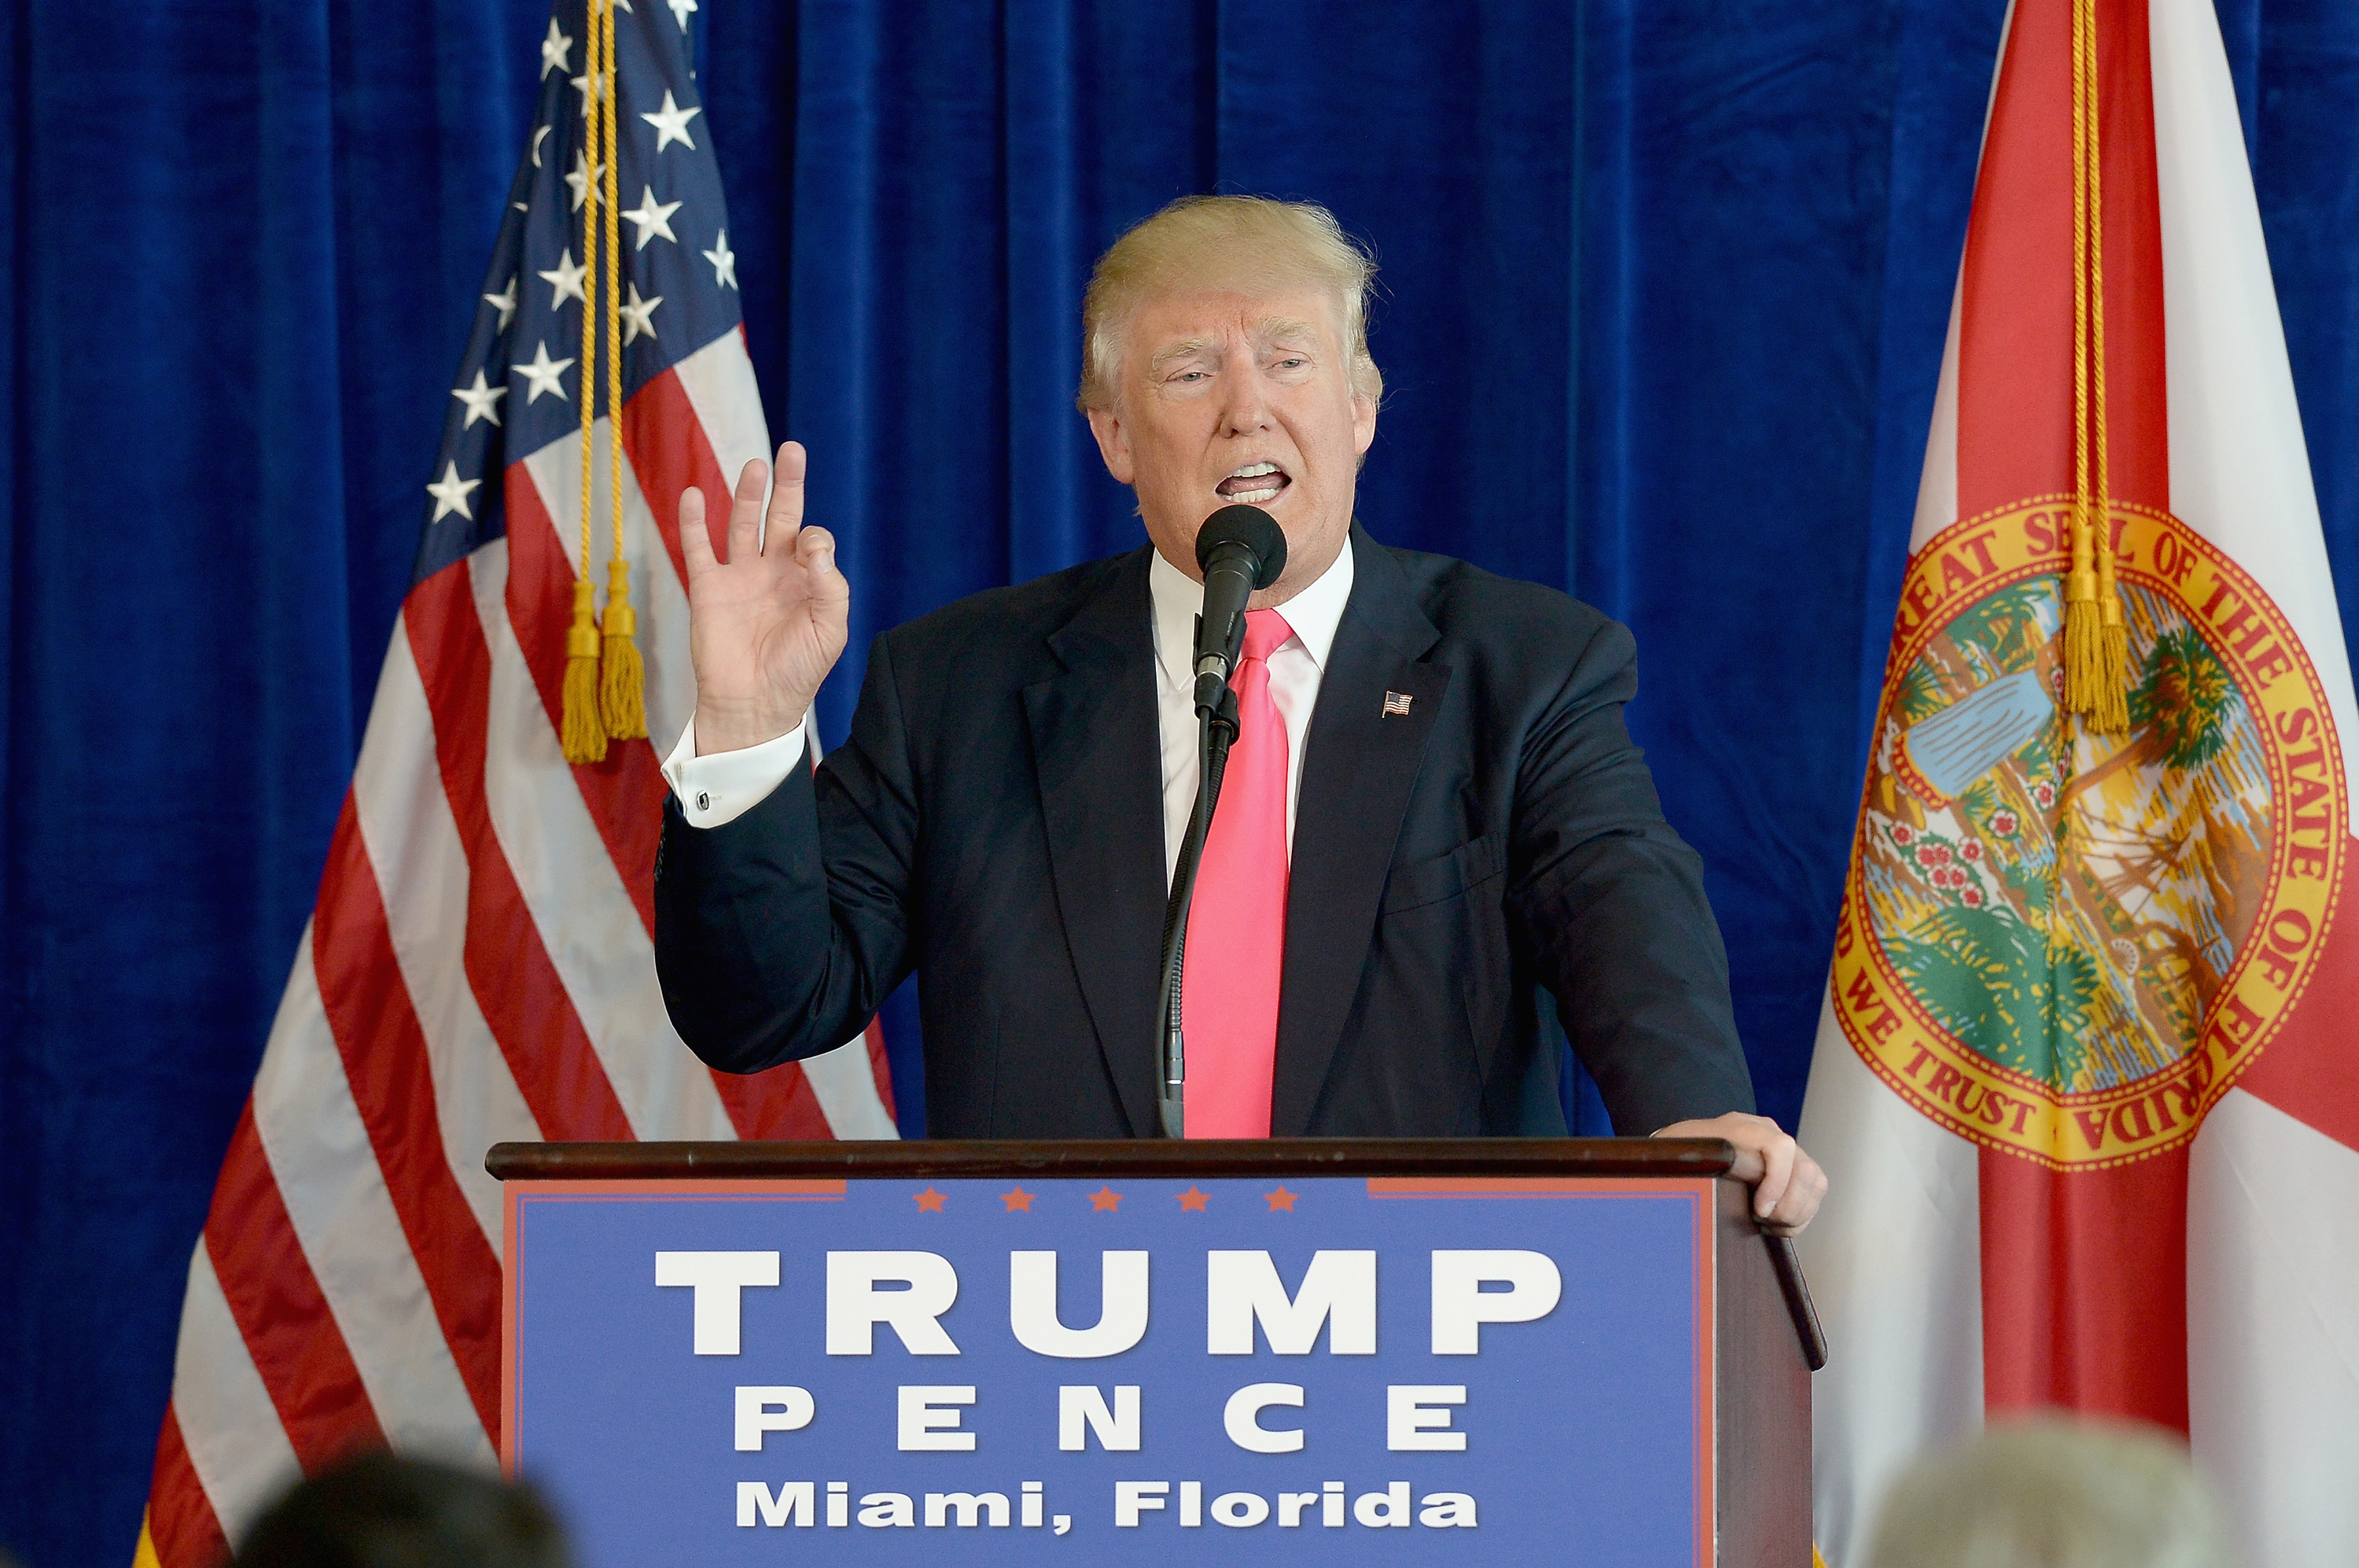 DORAL, FL - JULY 27: Donald J. Trump holds a press conference at Trump National Doral on July 27, 2016 in Doral, Florida.   Gustavo Caballero/Getty Images/AFP